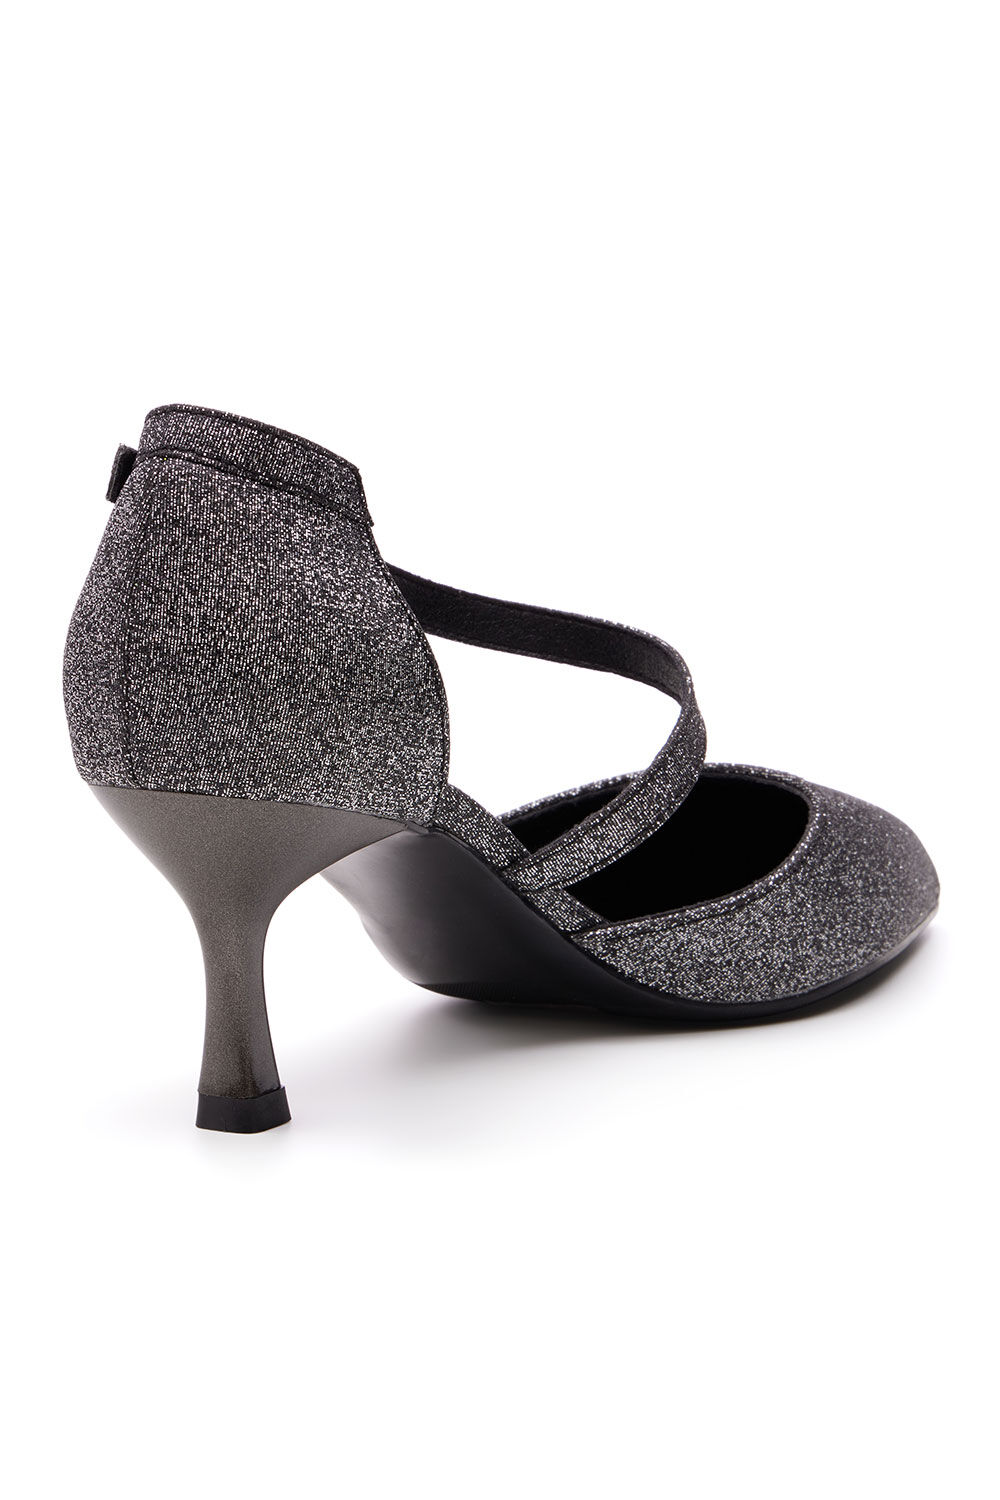 White Low Heels For Weddings | Black Wedding Shoes Ladies – Phoenix England